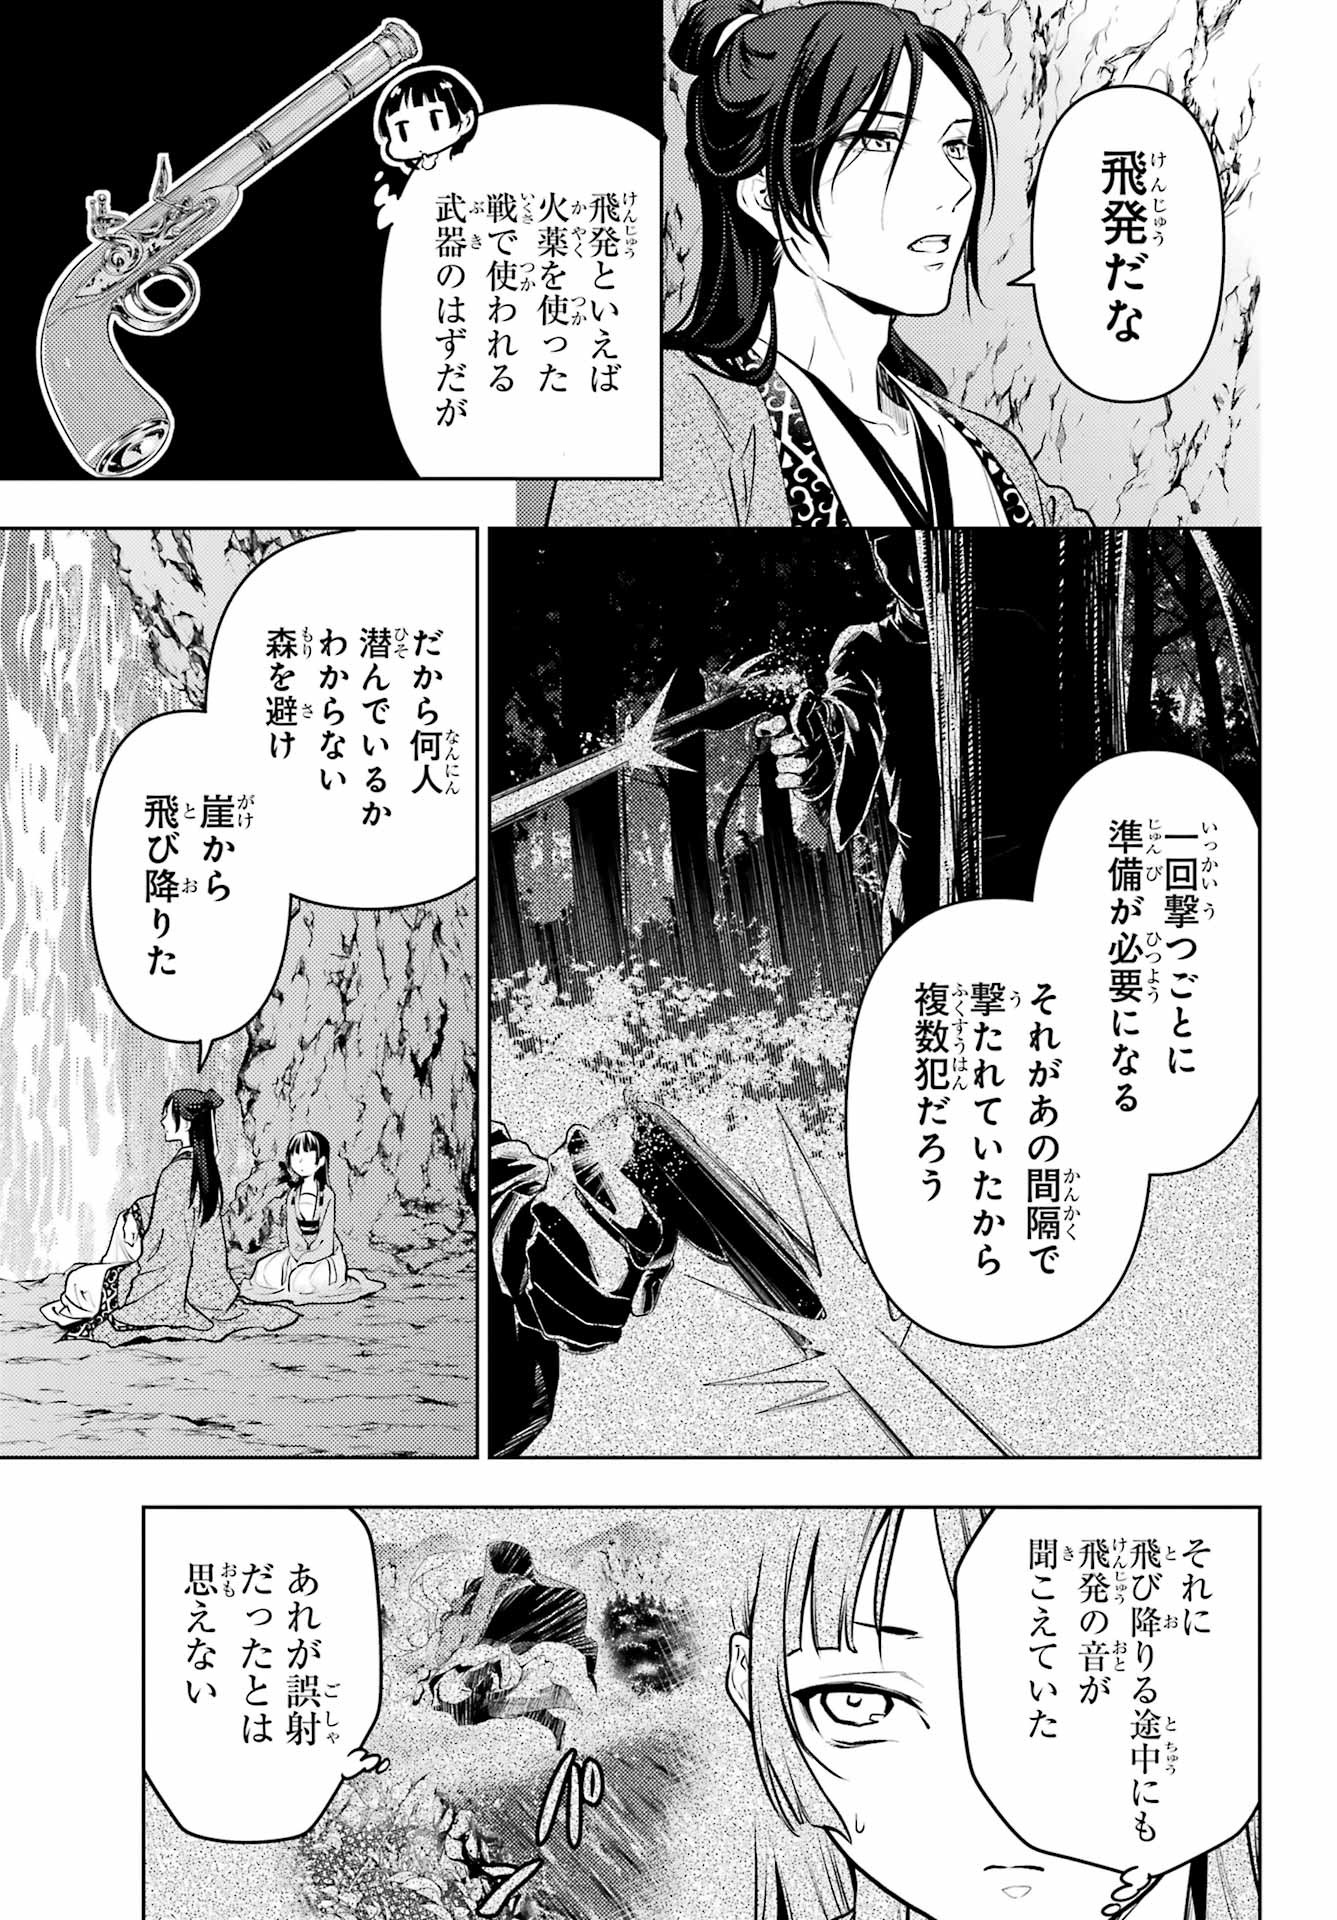 Kusuriya no Hitorigoto - Chapter 63 - Page 3